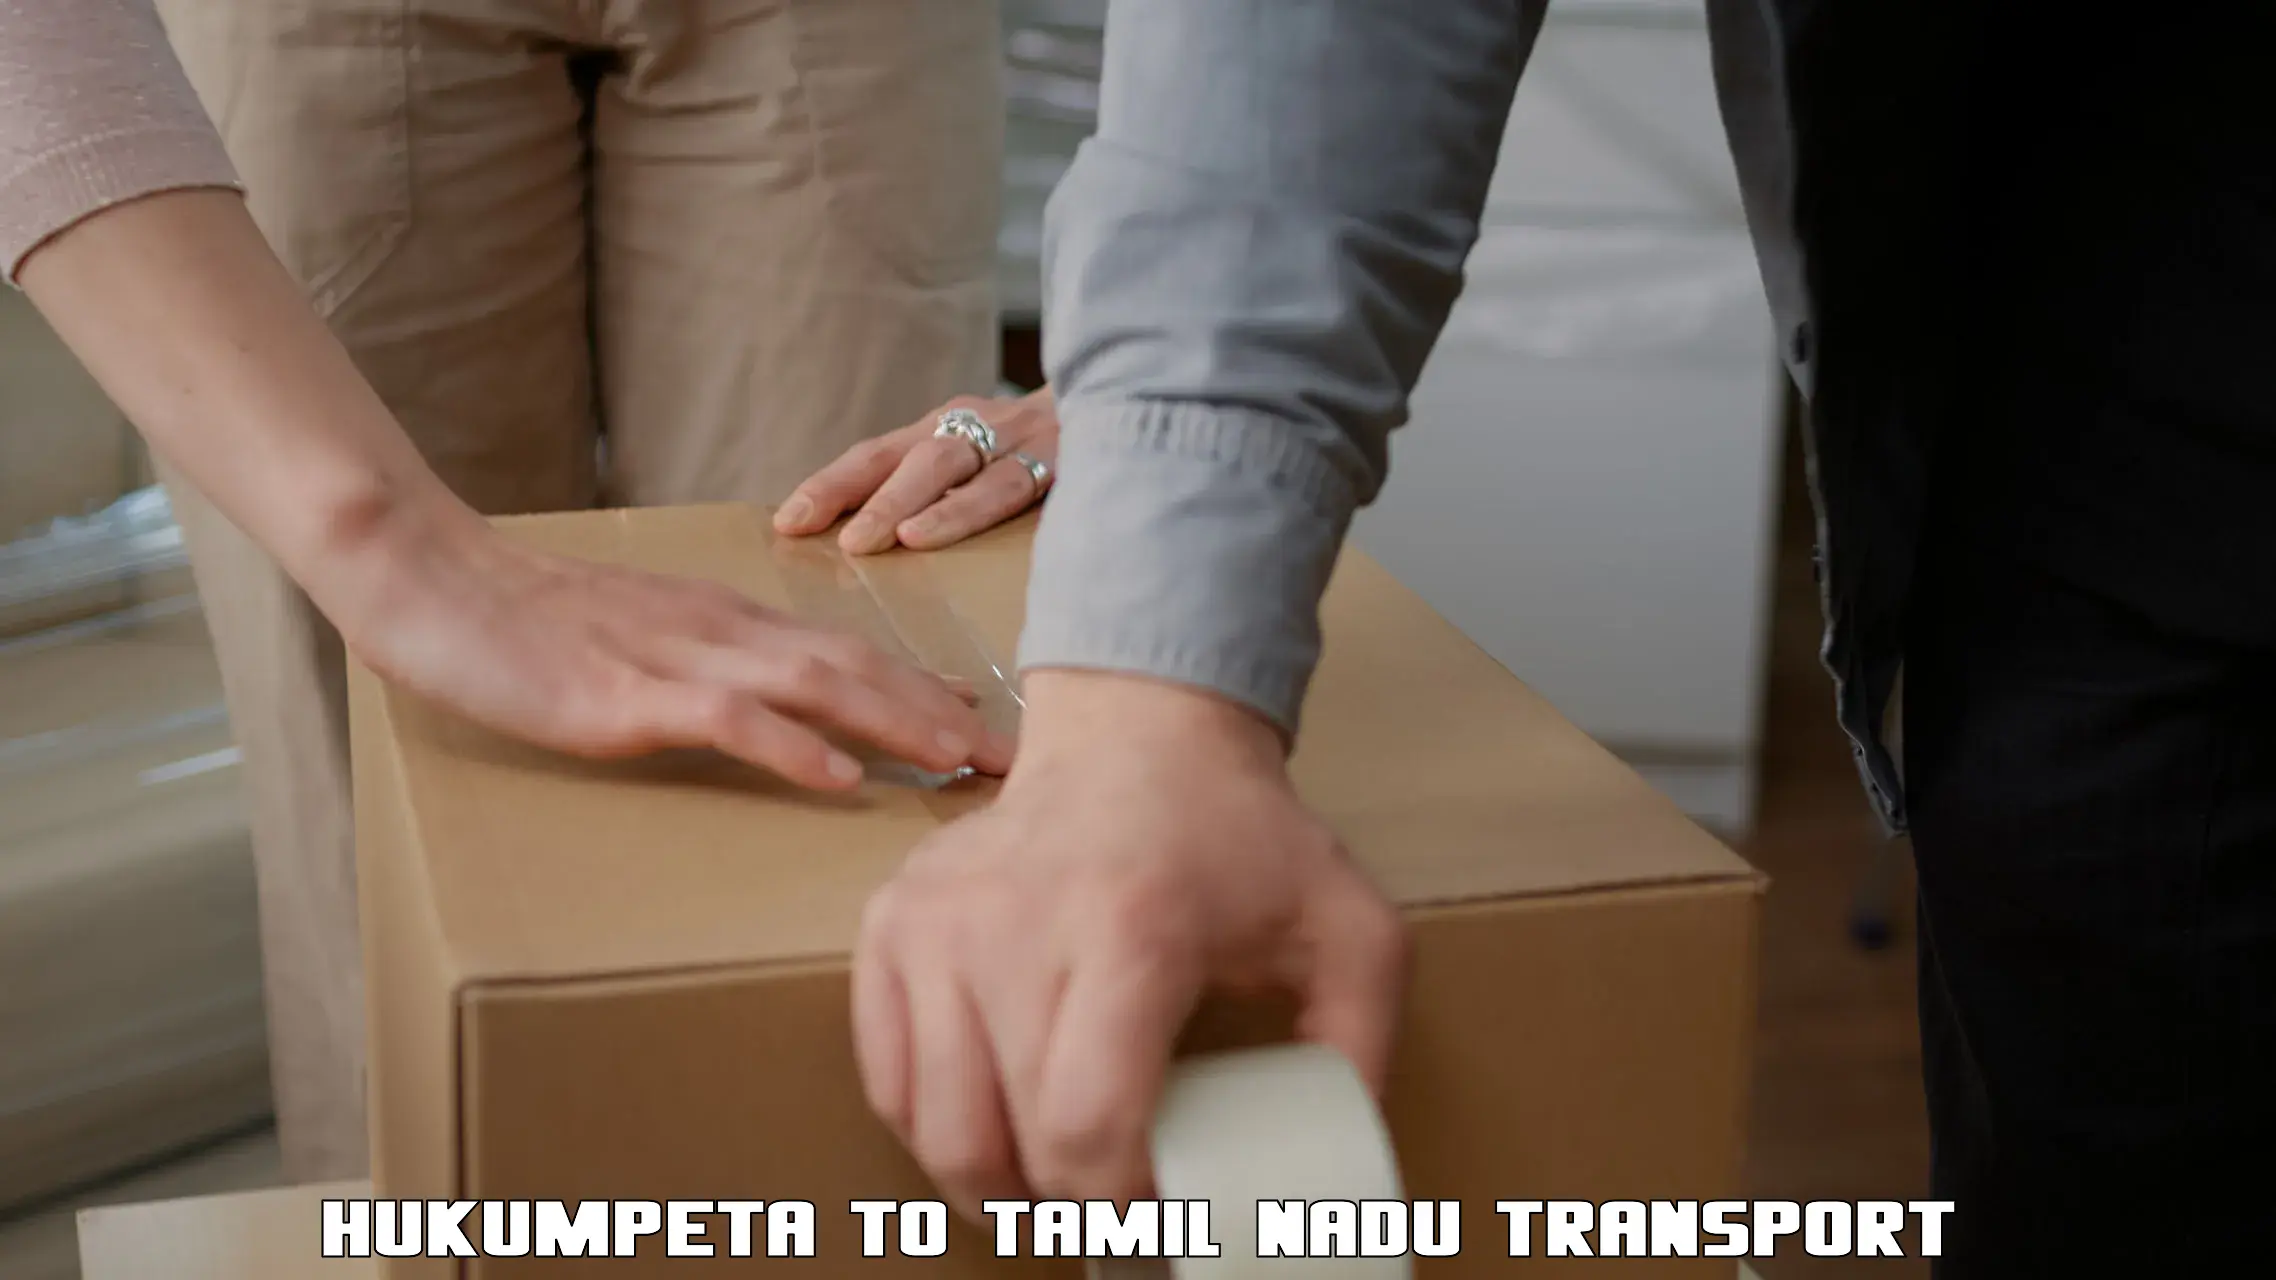 Shipping partner Hukumpeta to Tamil Nadu